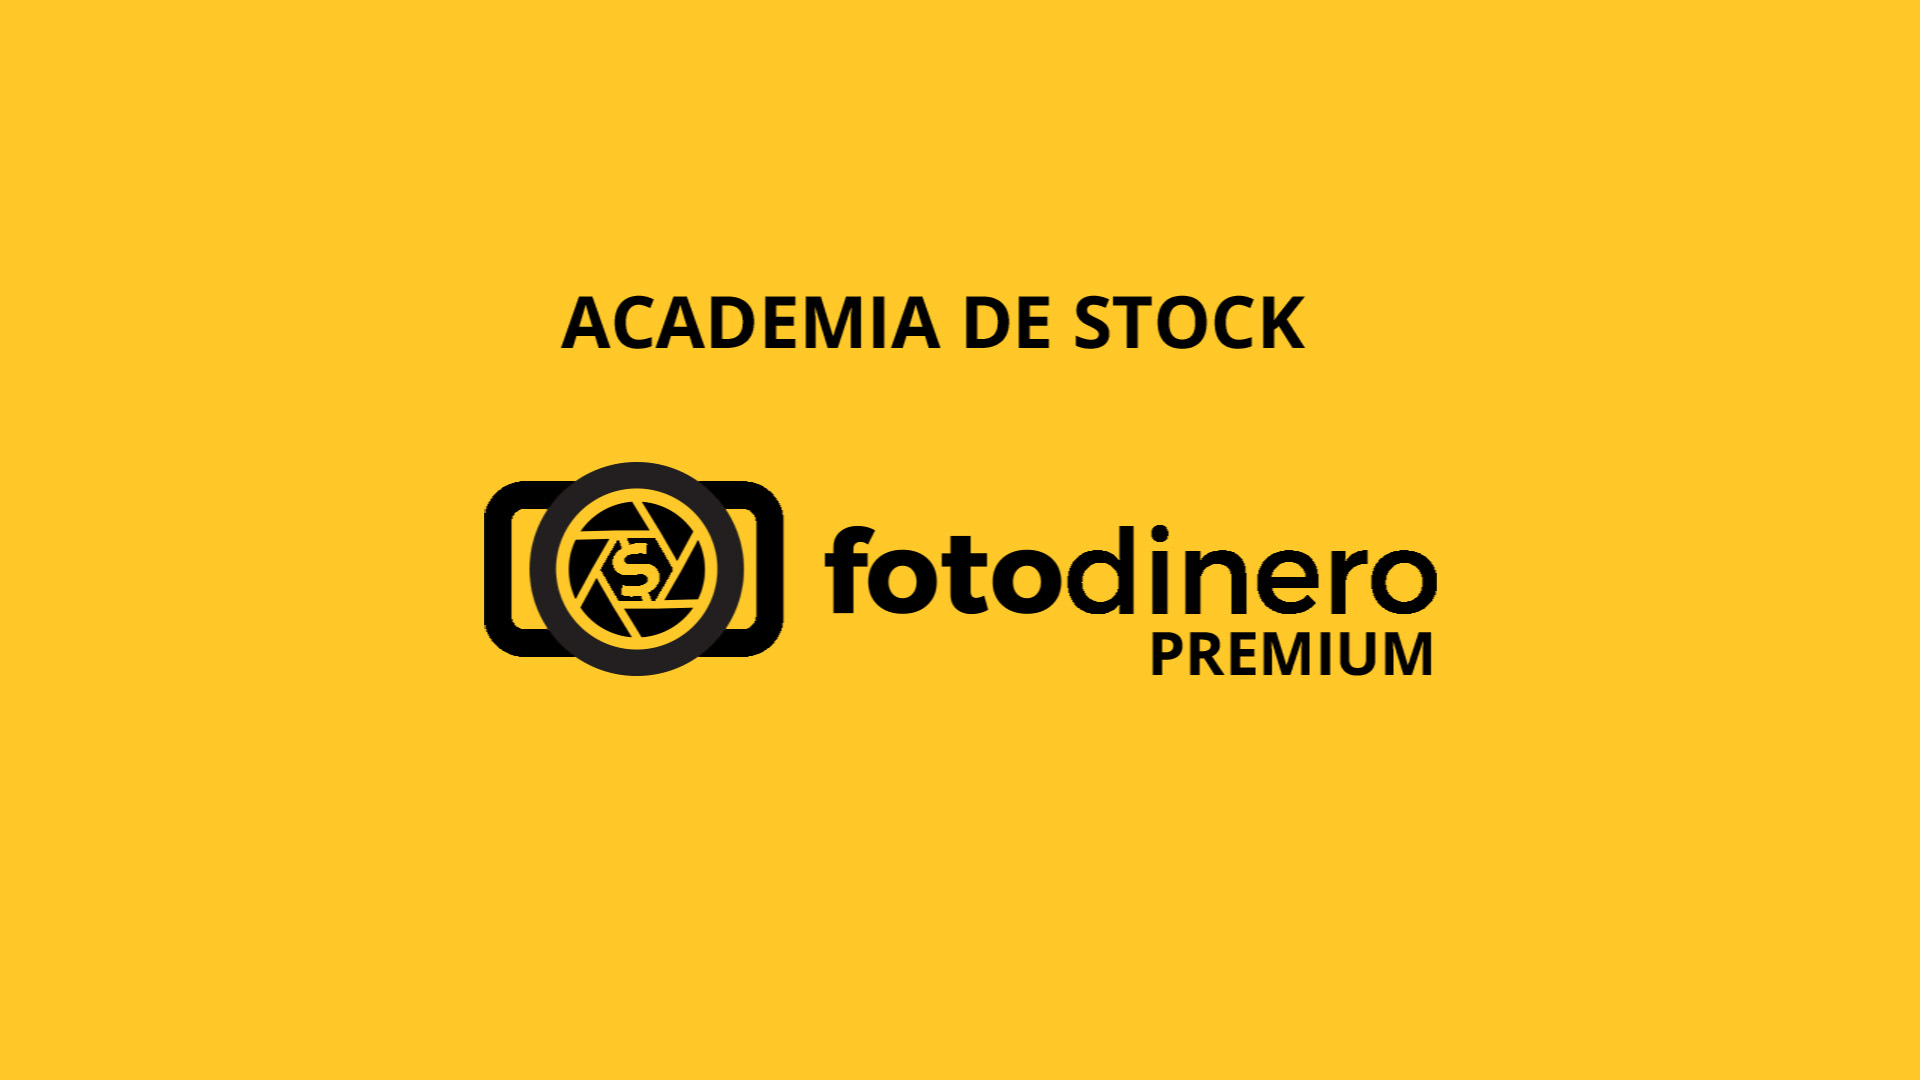 academia stock fotodinero premium